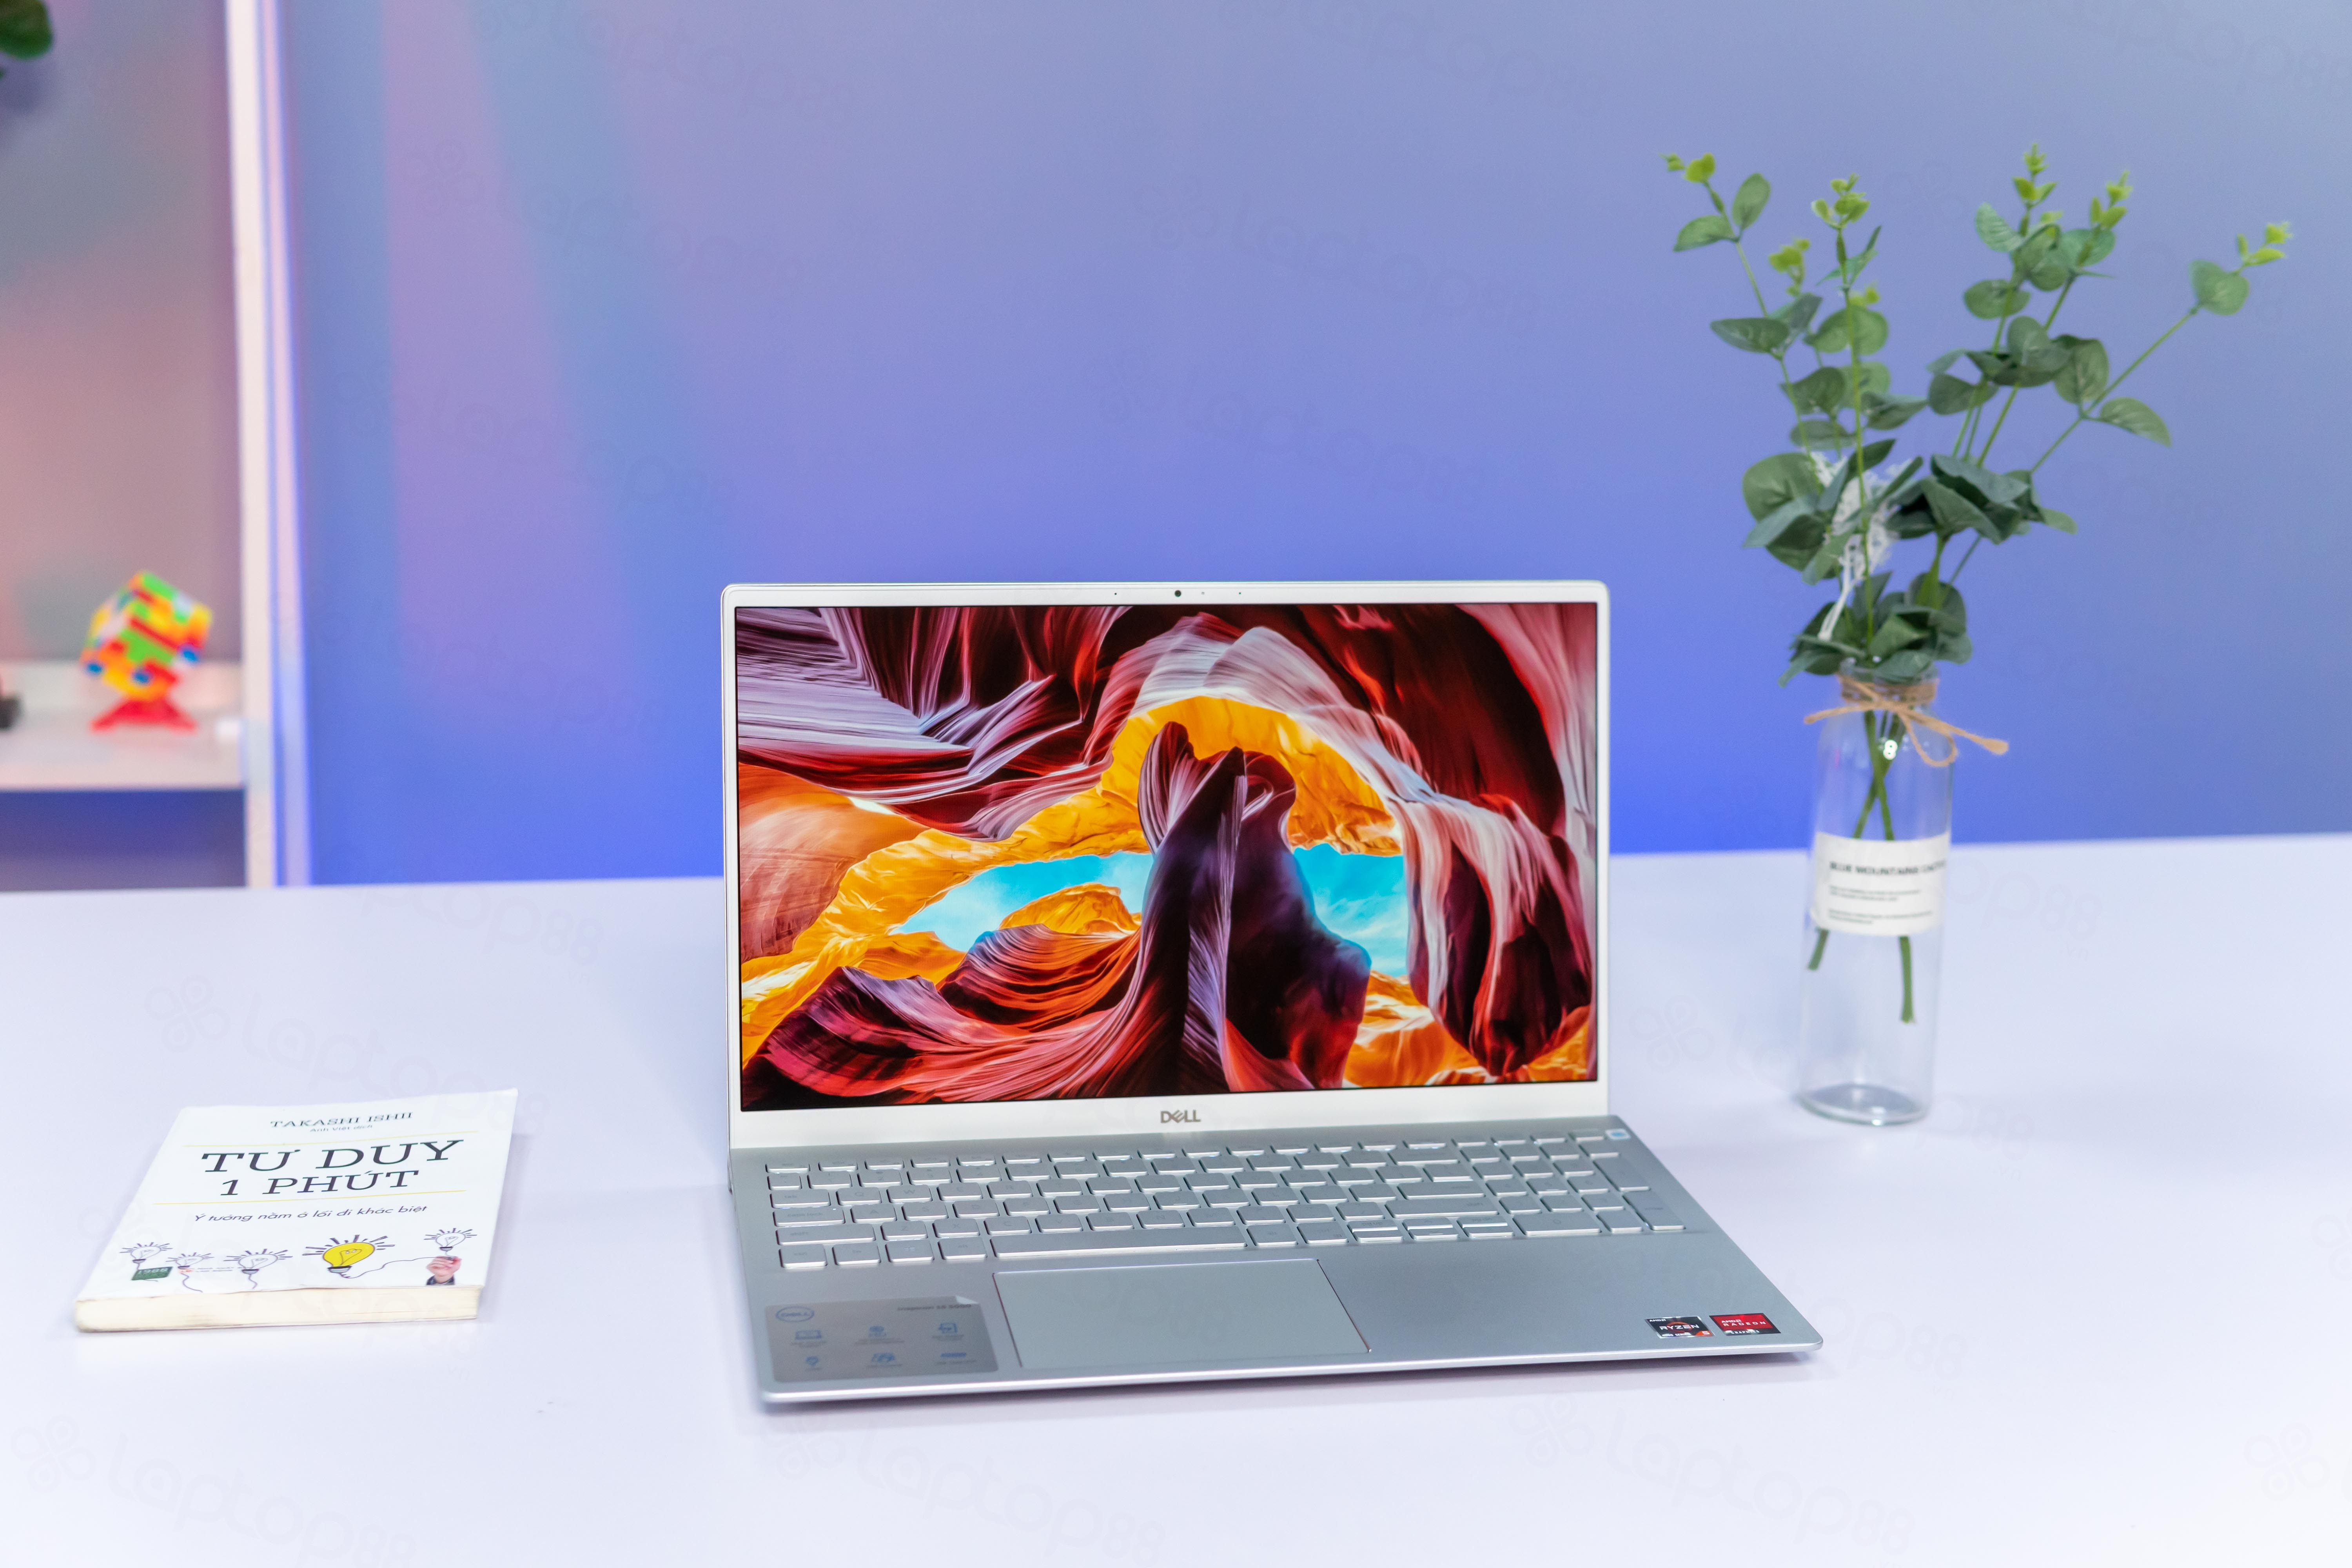 [Mới 100% Full Box] Laptop Dell inspiron 5505 0XDDY - AMD Ryzen 7